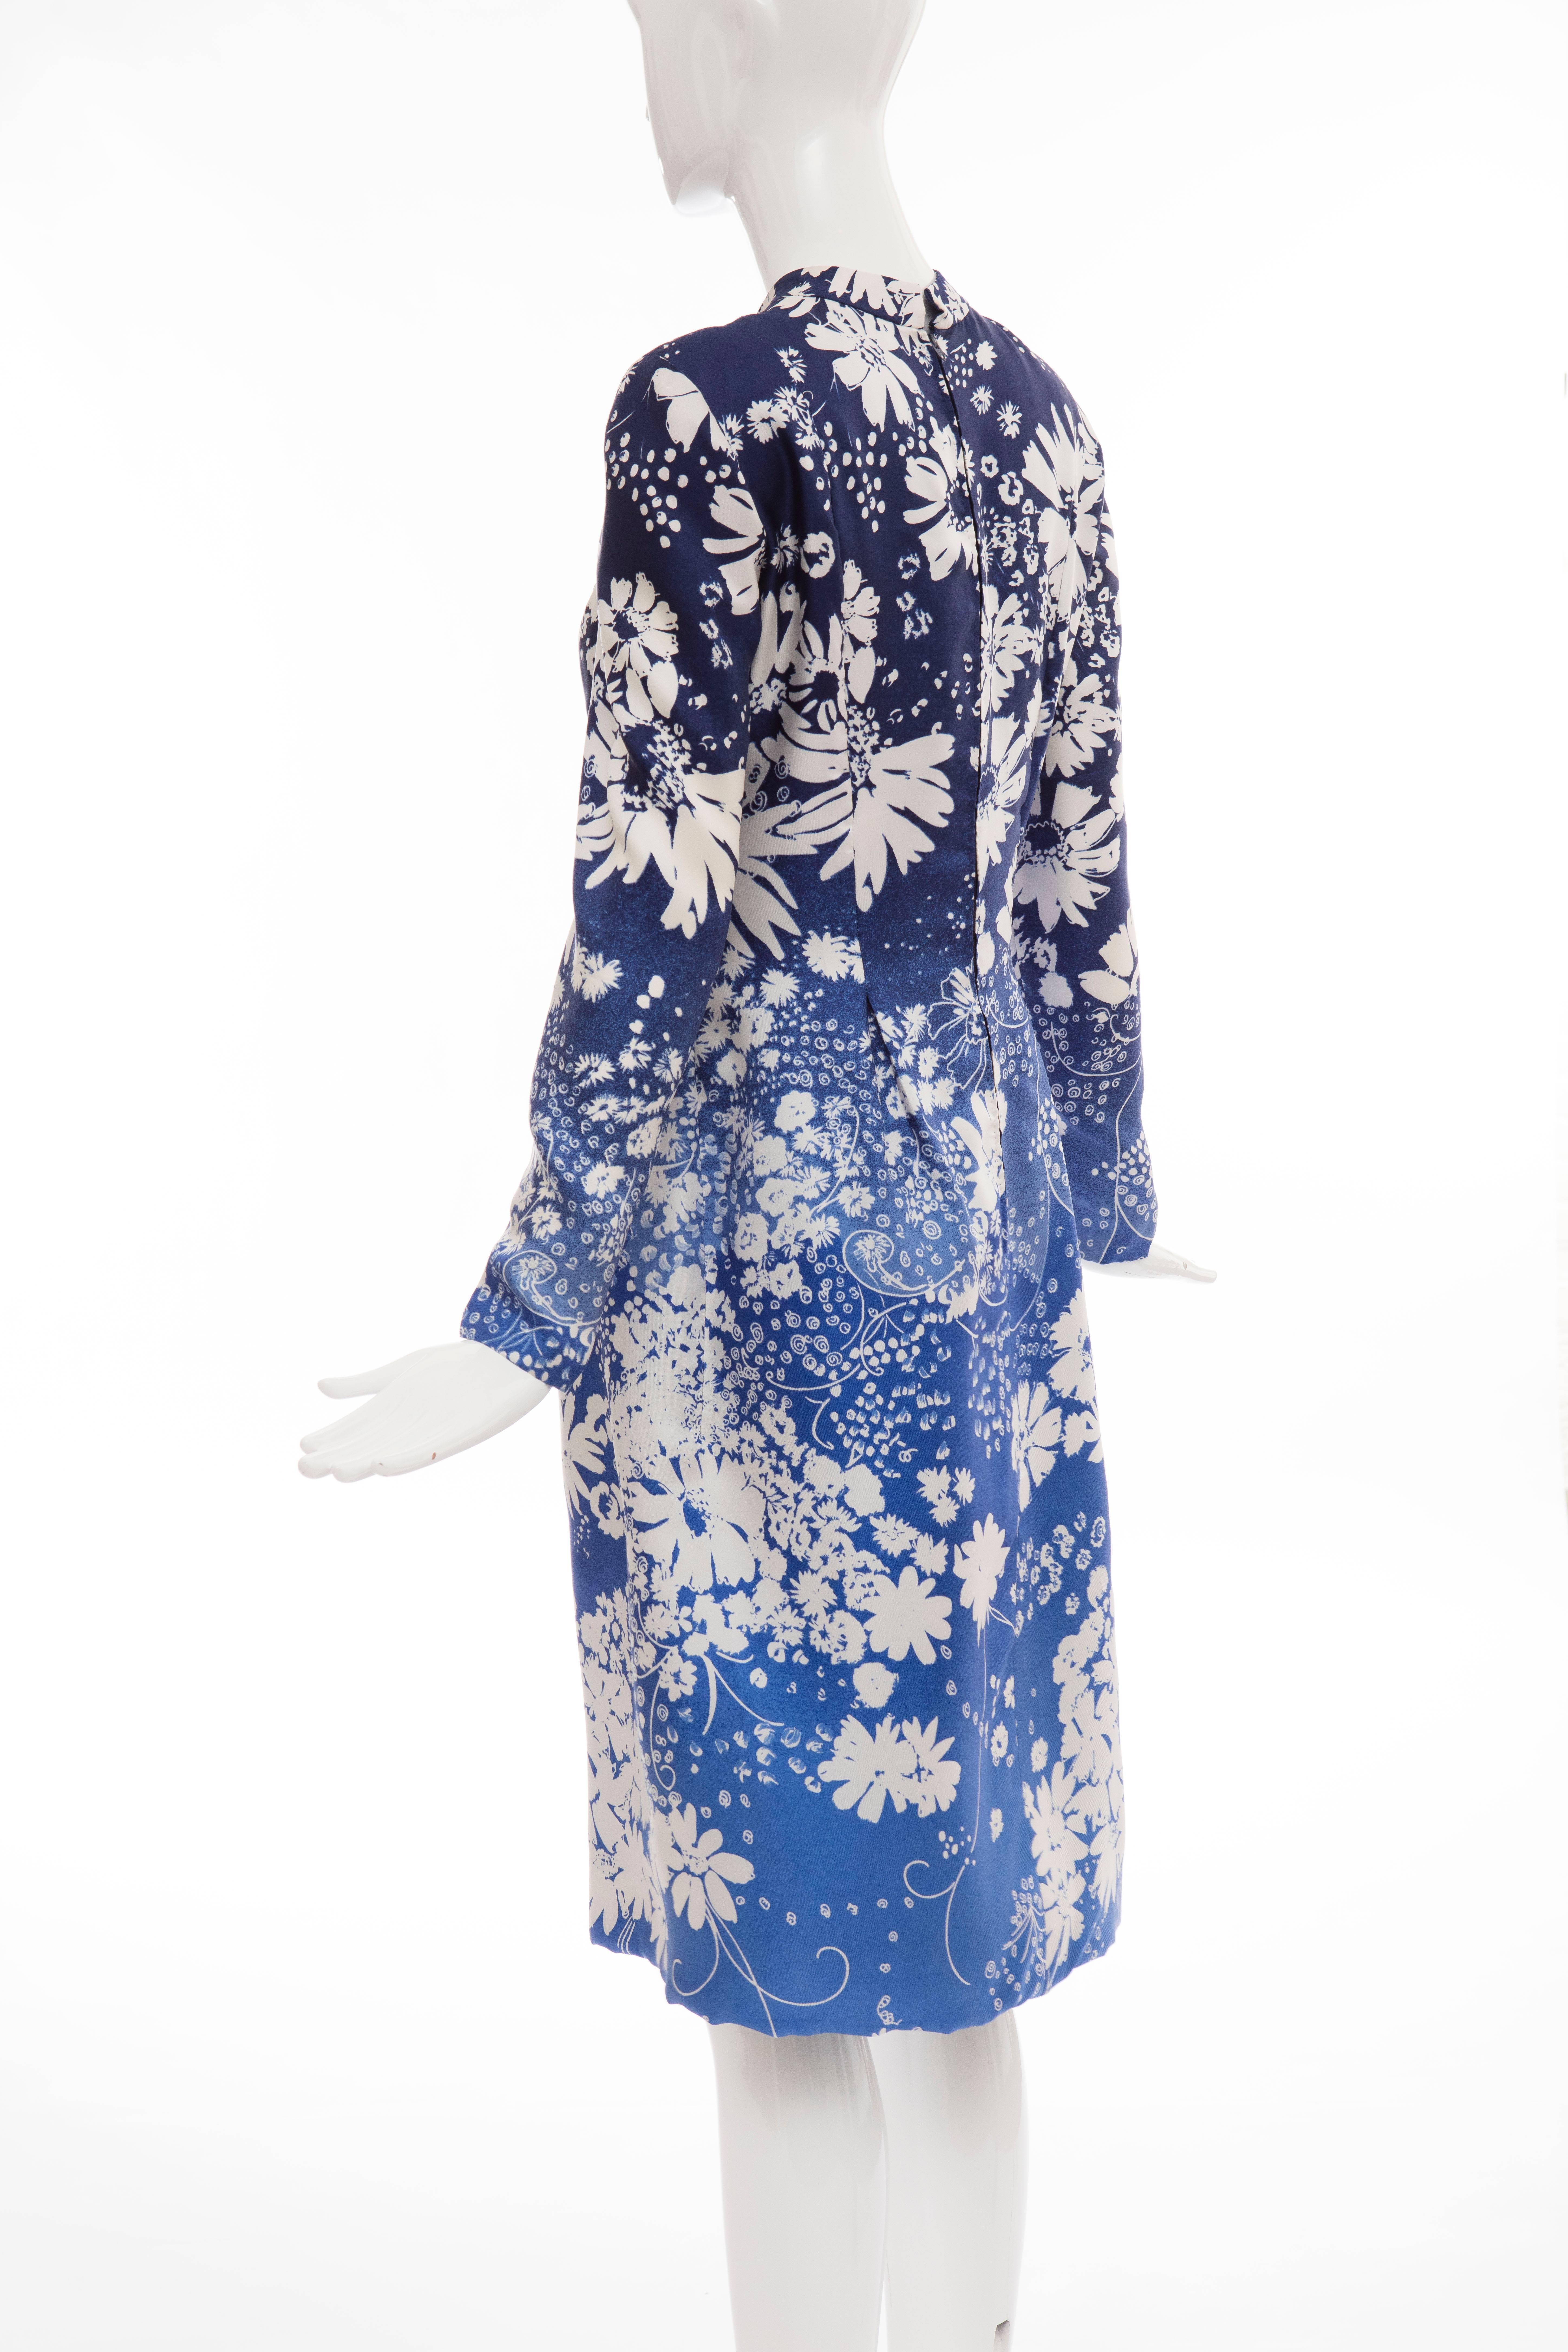 Pauline Trigere Navy Blue Ombre Silk Floral Long Sleeve Dress, Circa 1980's 4